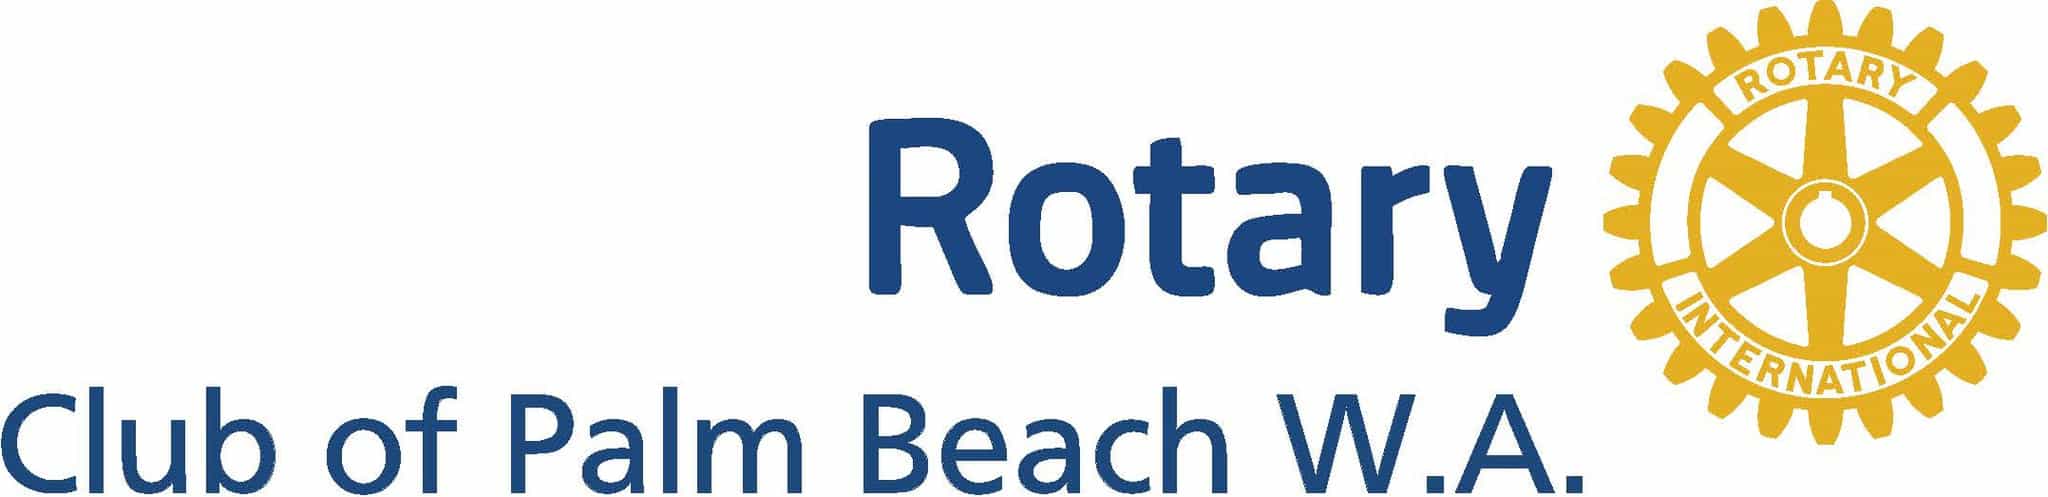 Rotary Club of Palm Beach New Logo